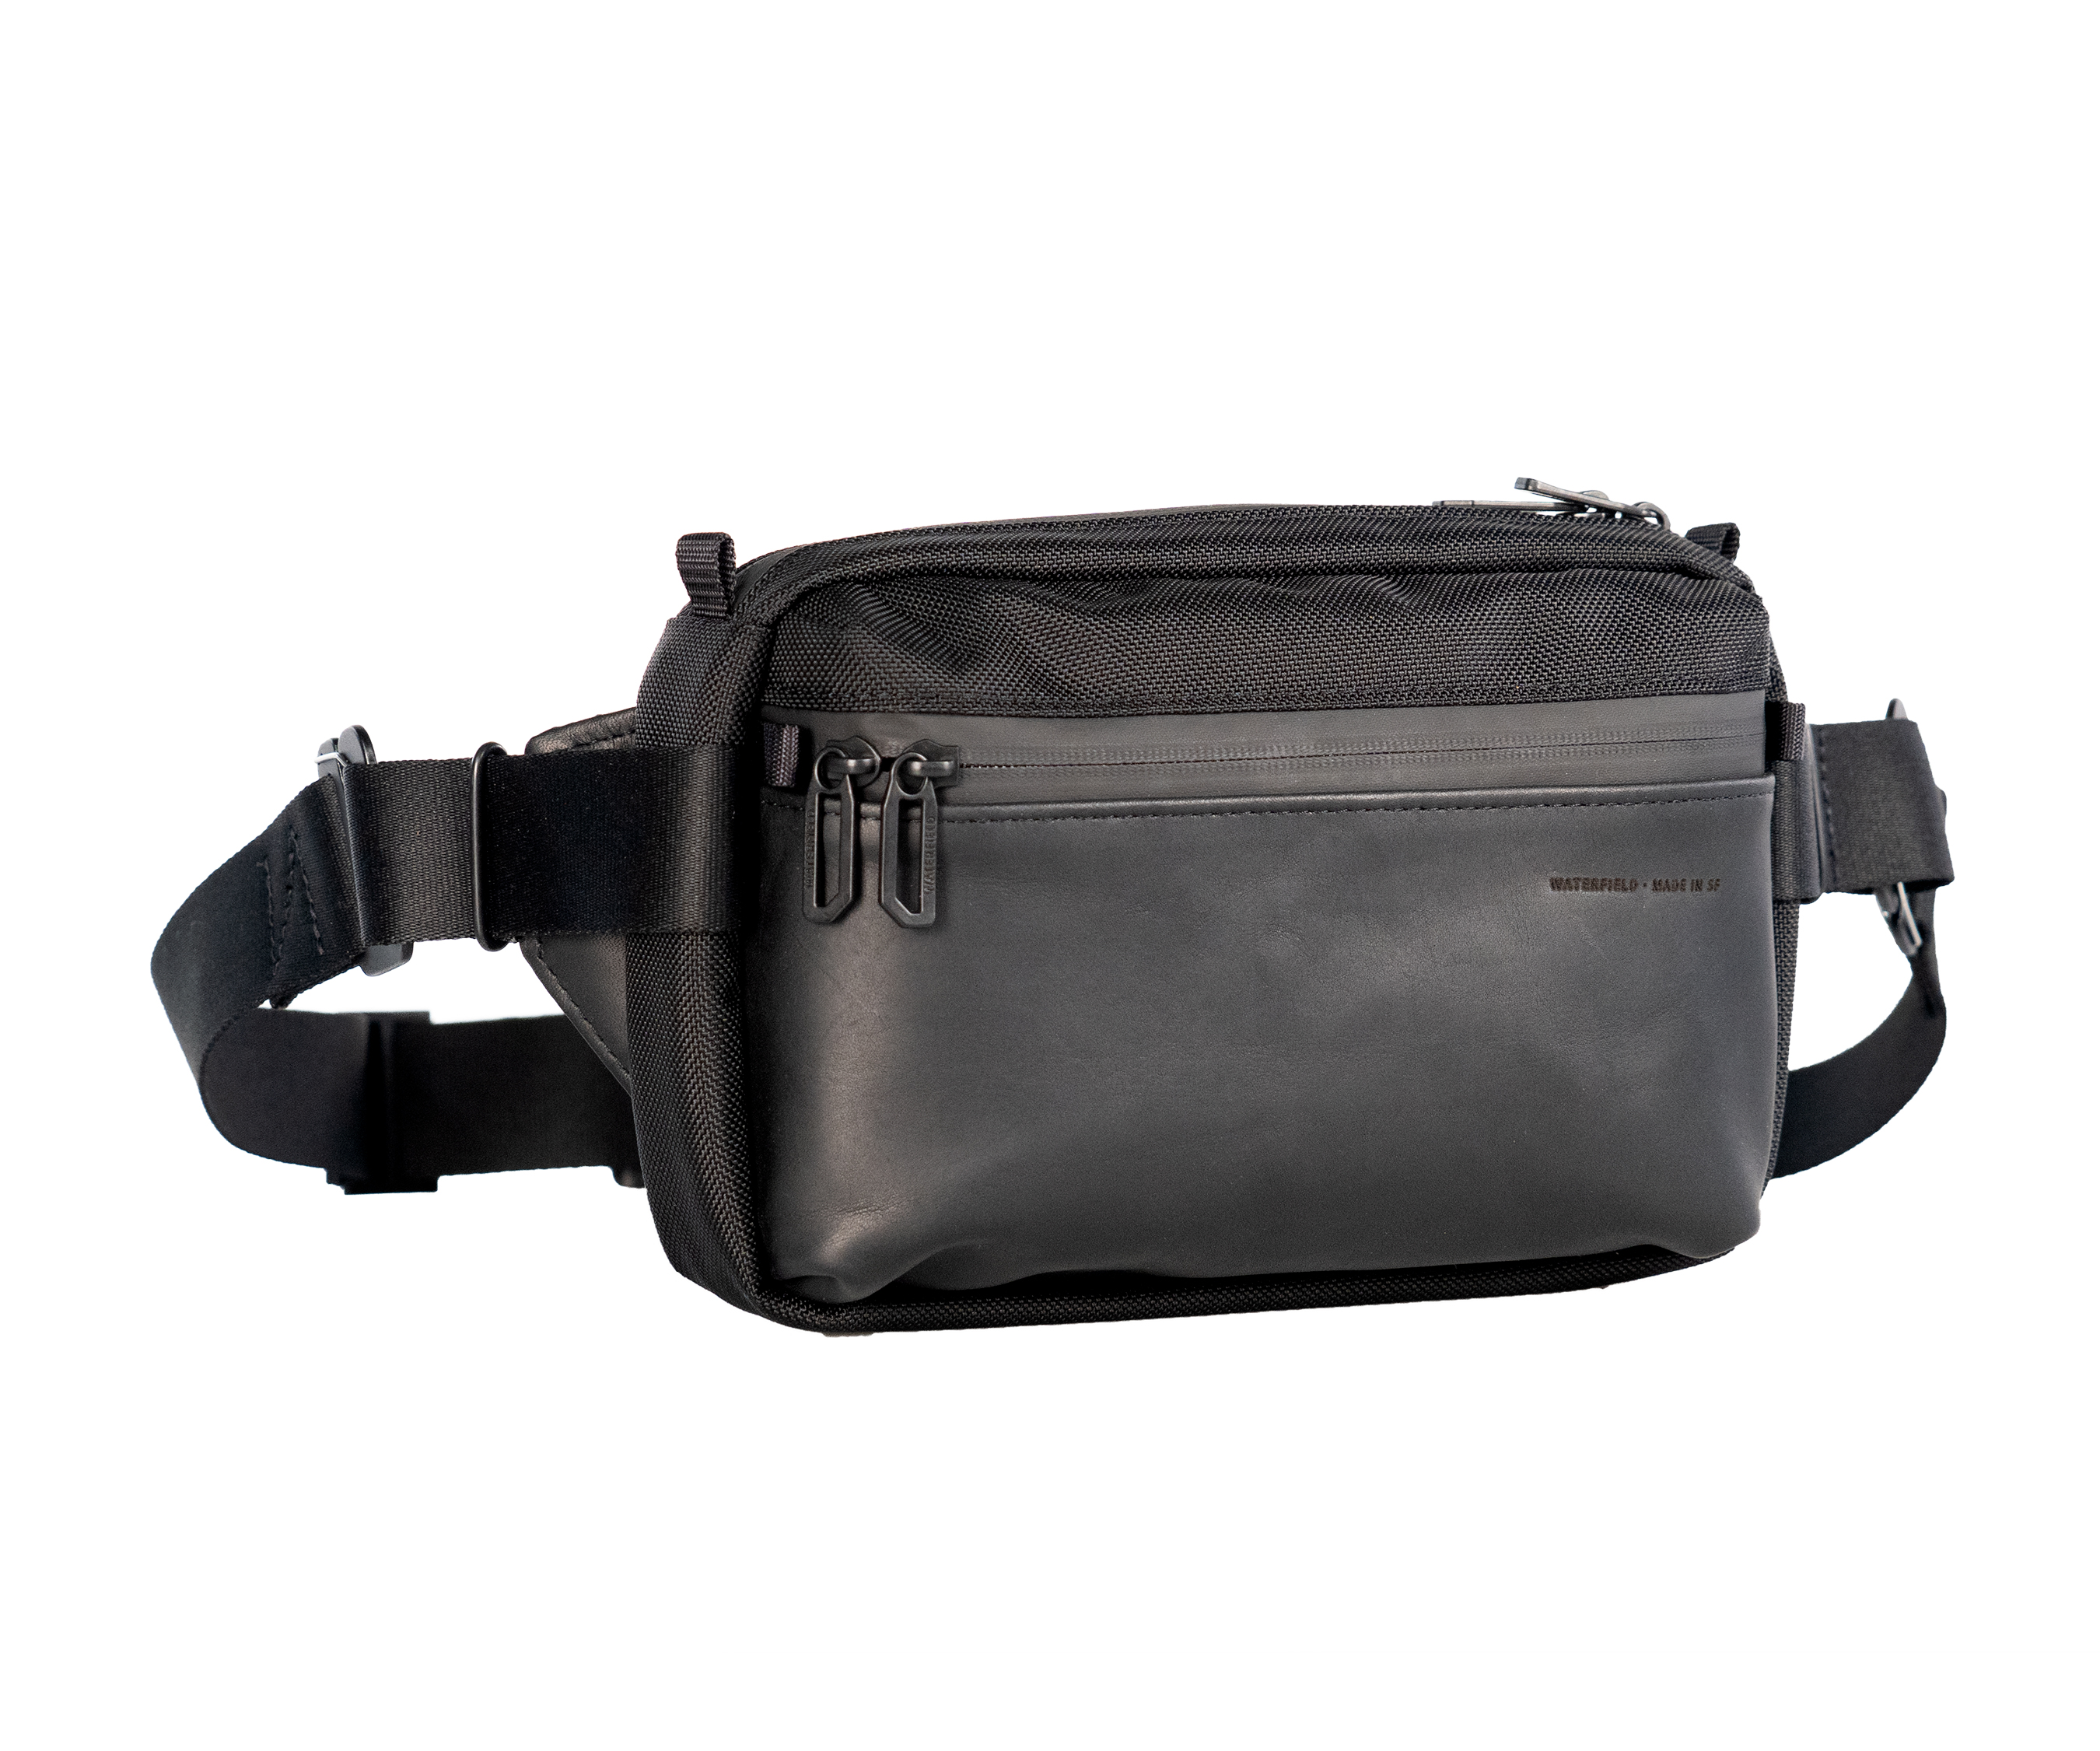 Compact Hip Sling Bag in black ballistic nylon with black, full-grain leather